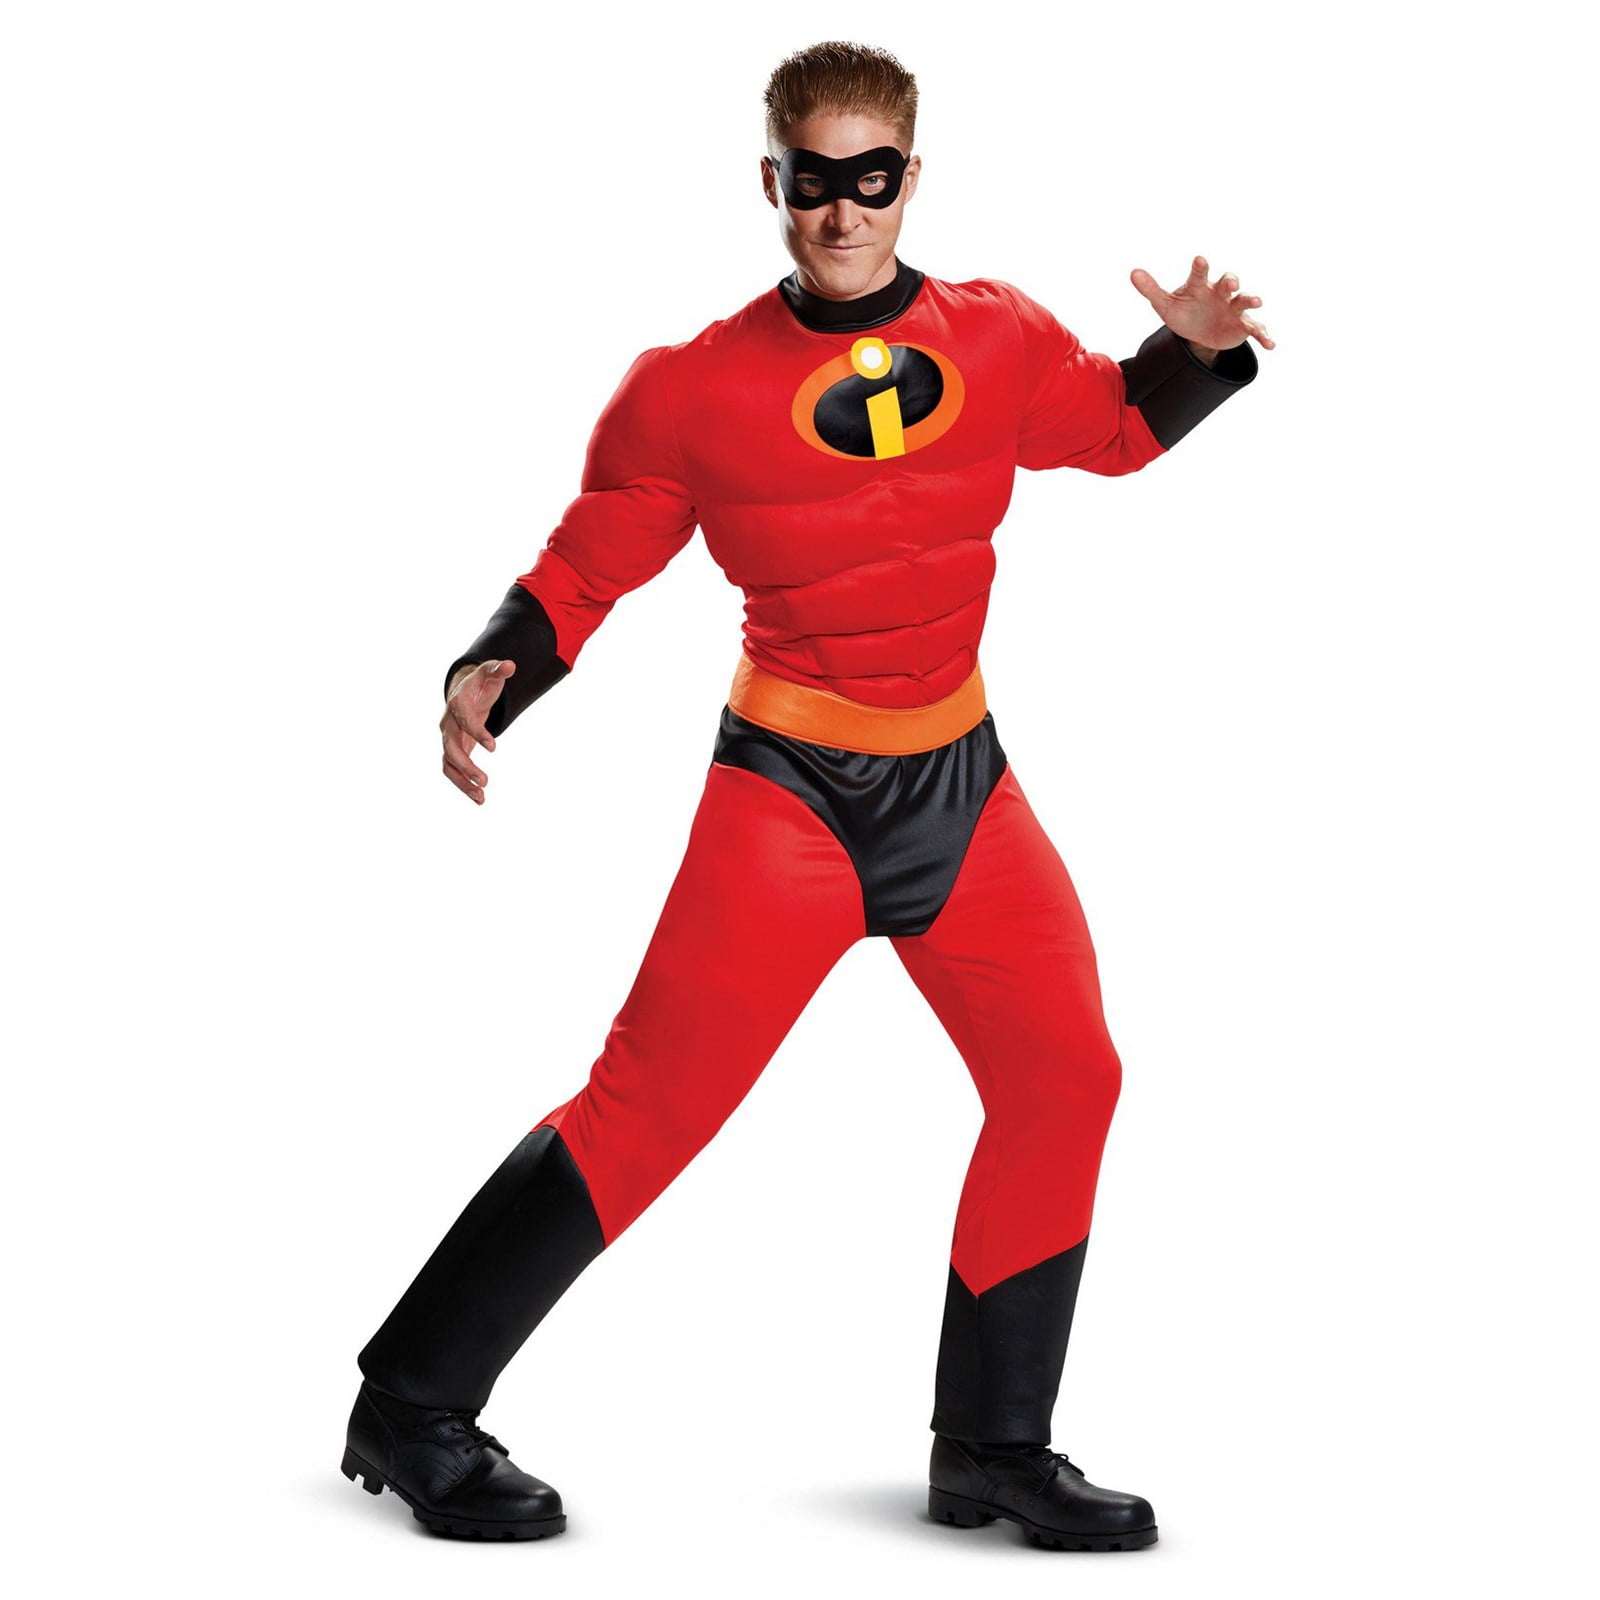 Costume des indestructibles 💪🏼🦸‍♀️ #superheroes #indestructible #co